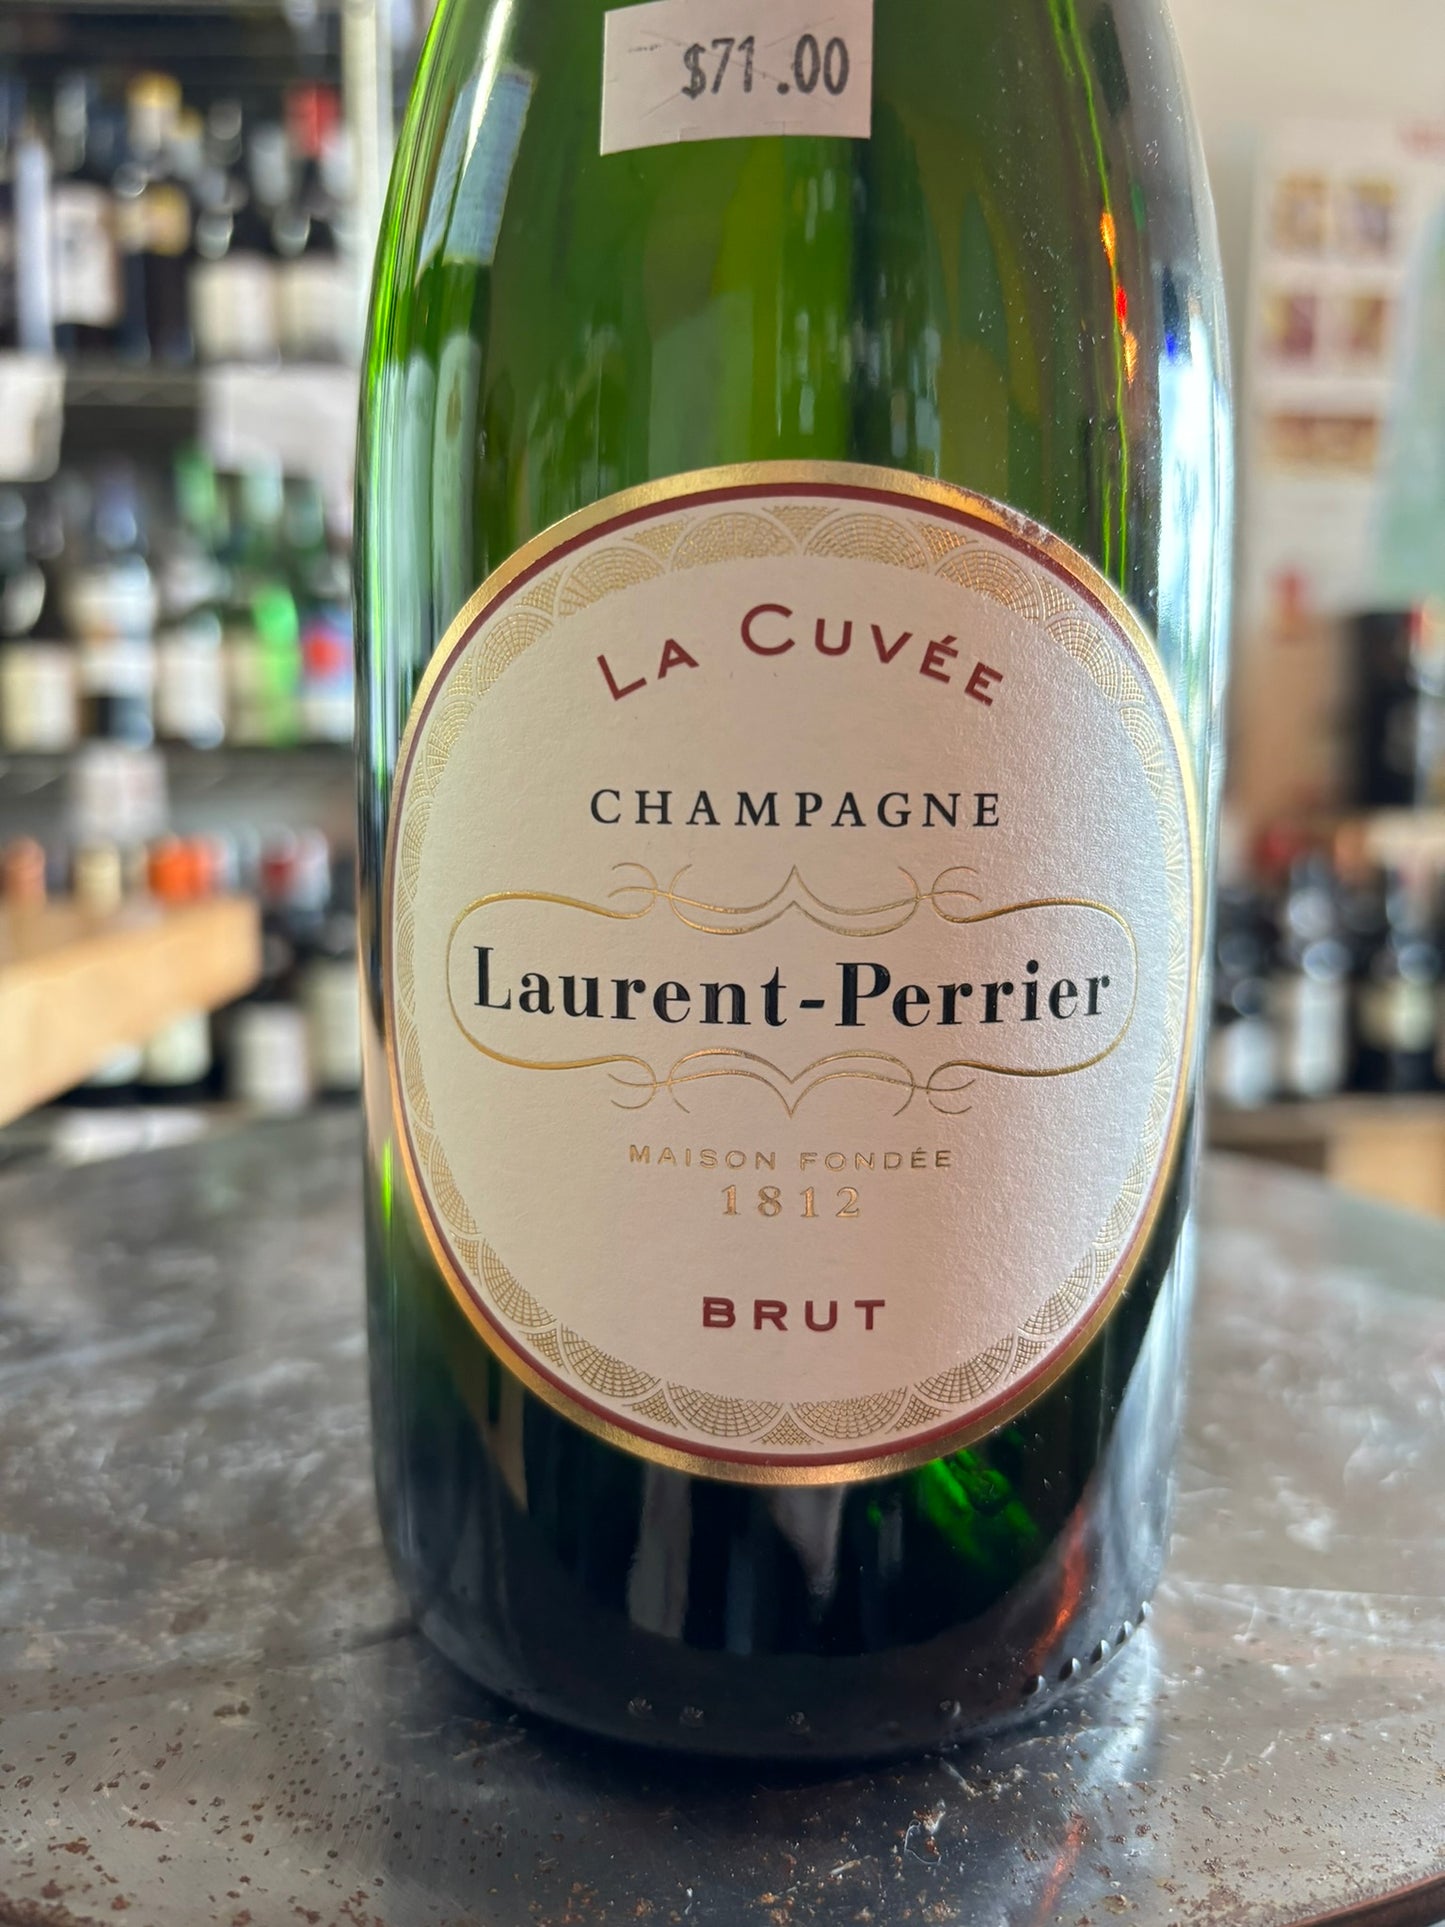 LAURENT-PIERRE NV Champagne 'La Cuvee Brut' (Champagne, France)